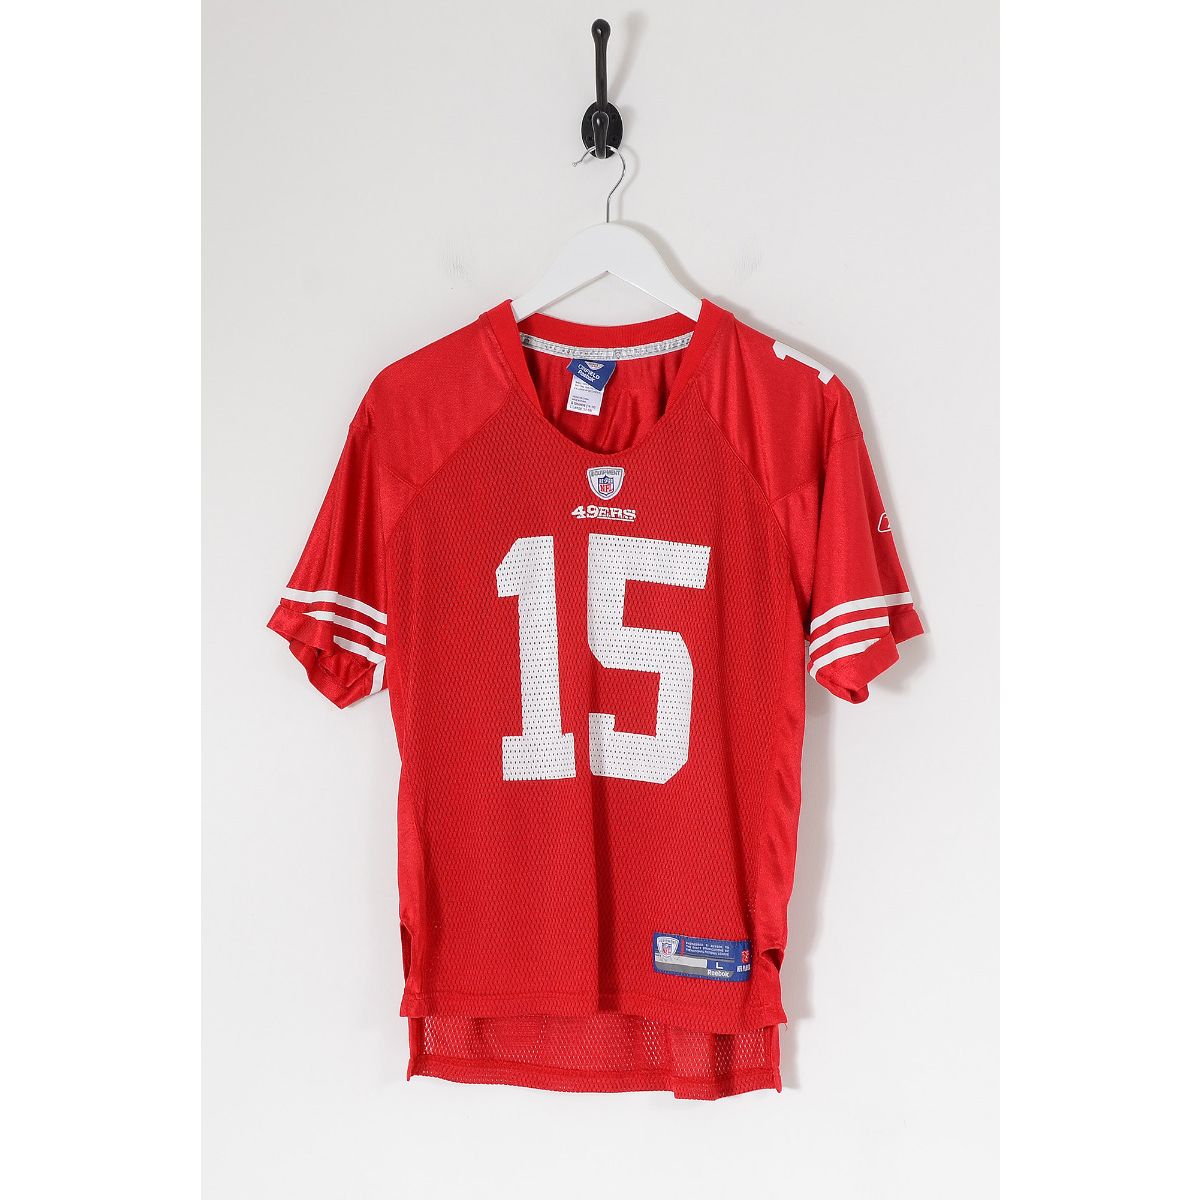 Vintage REEBOK NFL San Francisco 49ers American Football Jersey Red Large